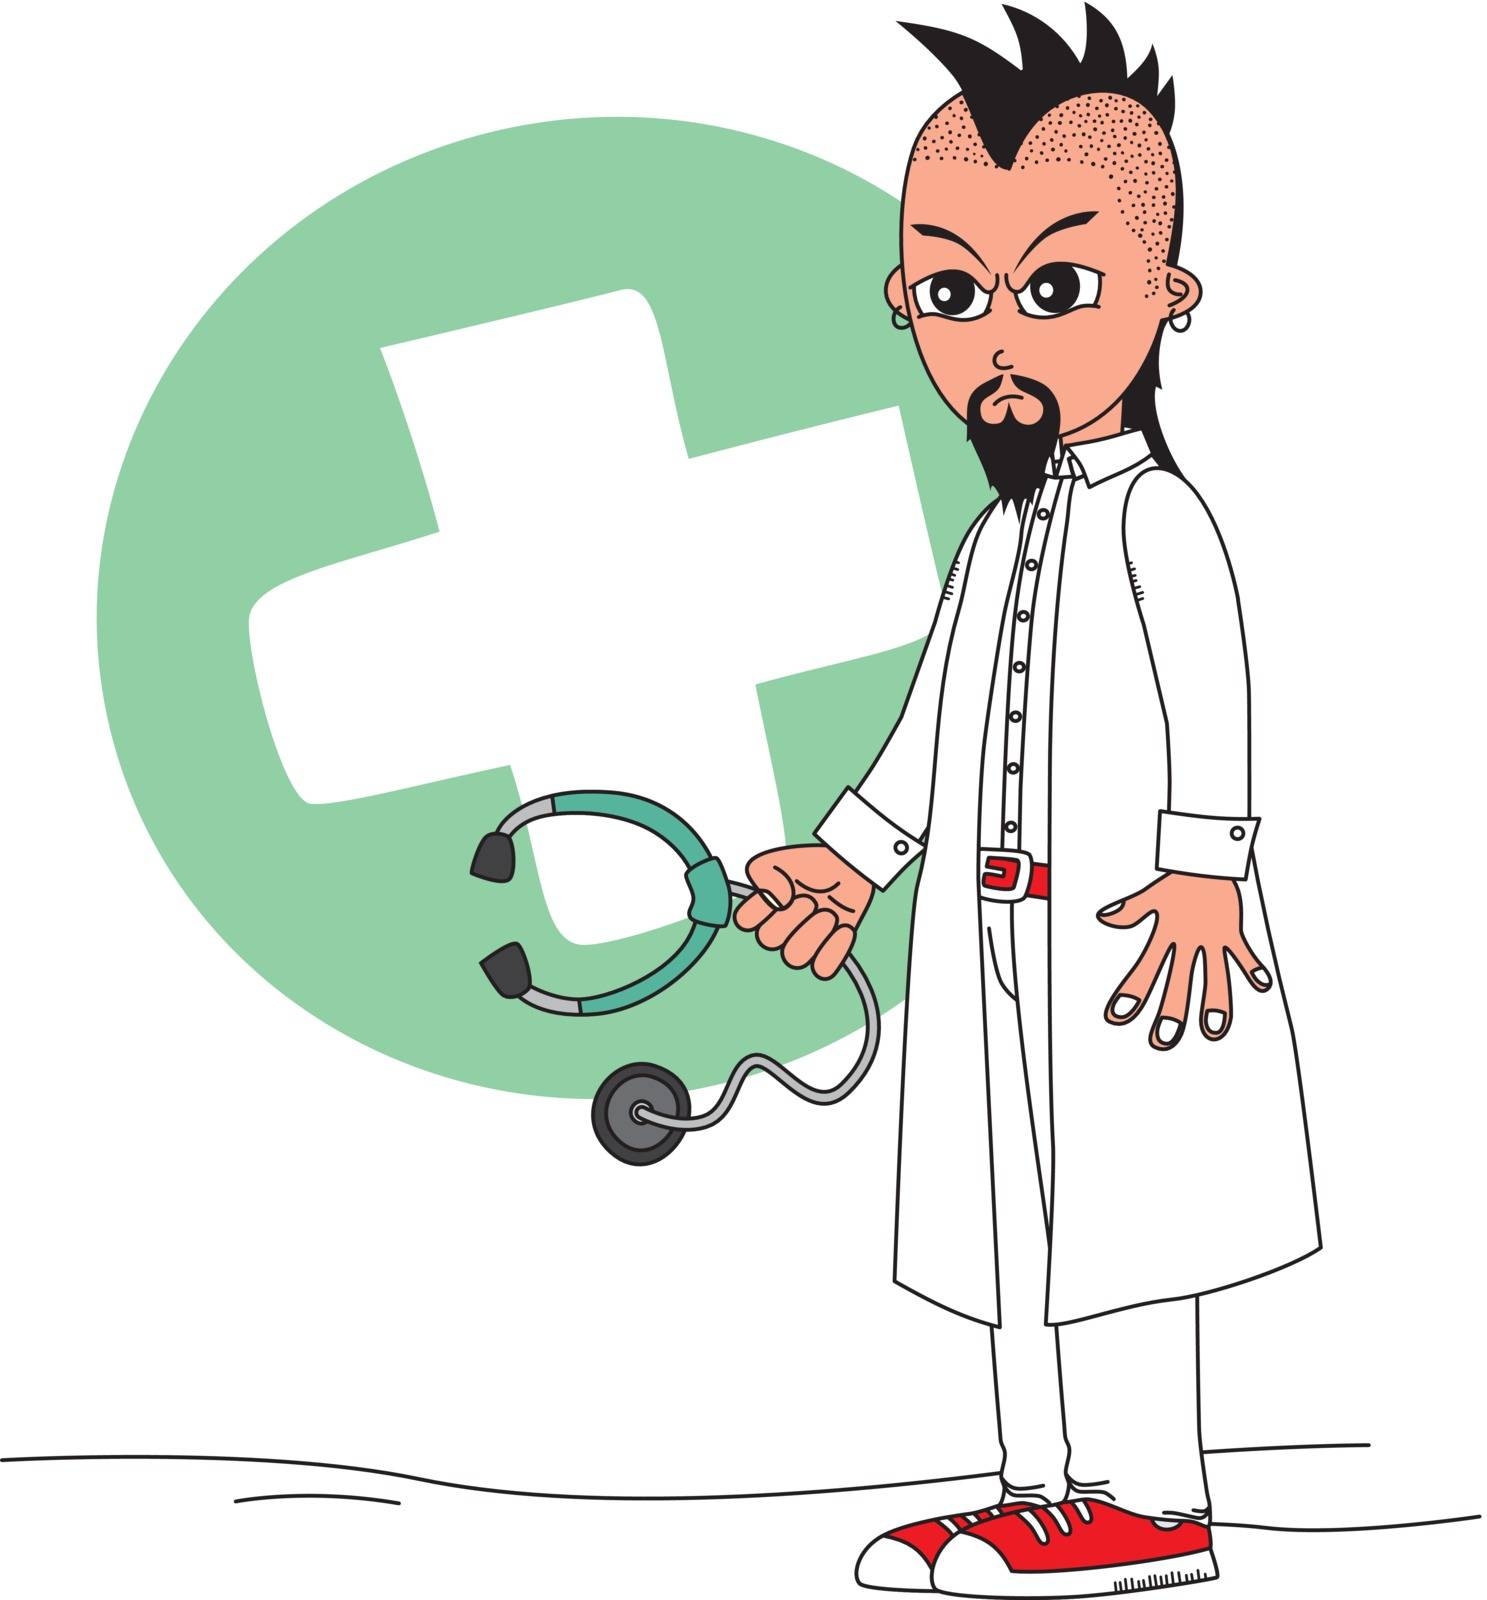 doctor cartoon character vector graphic art illustration